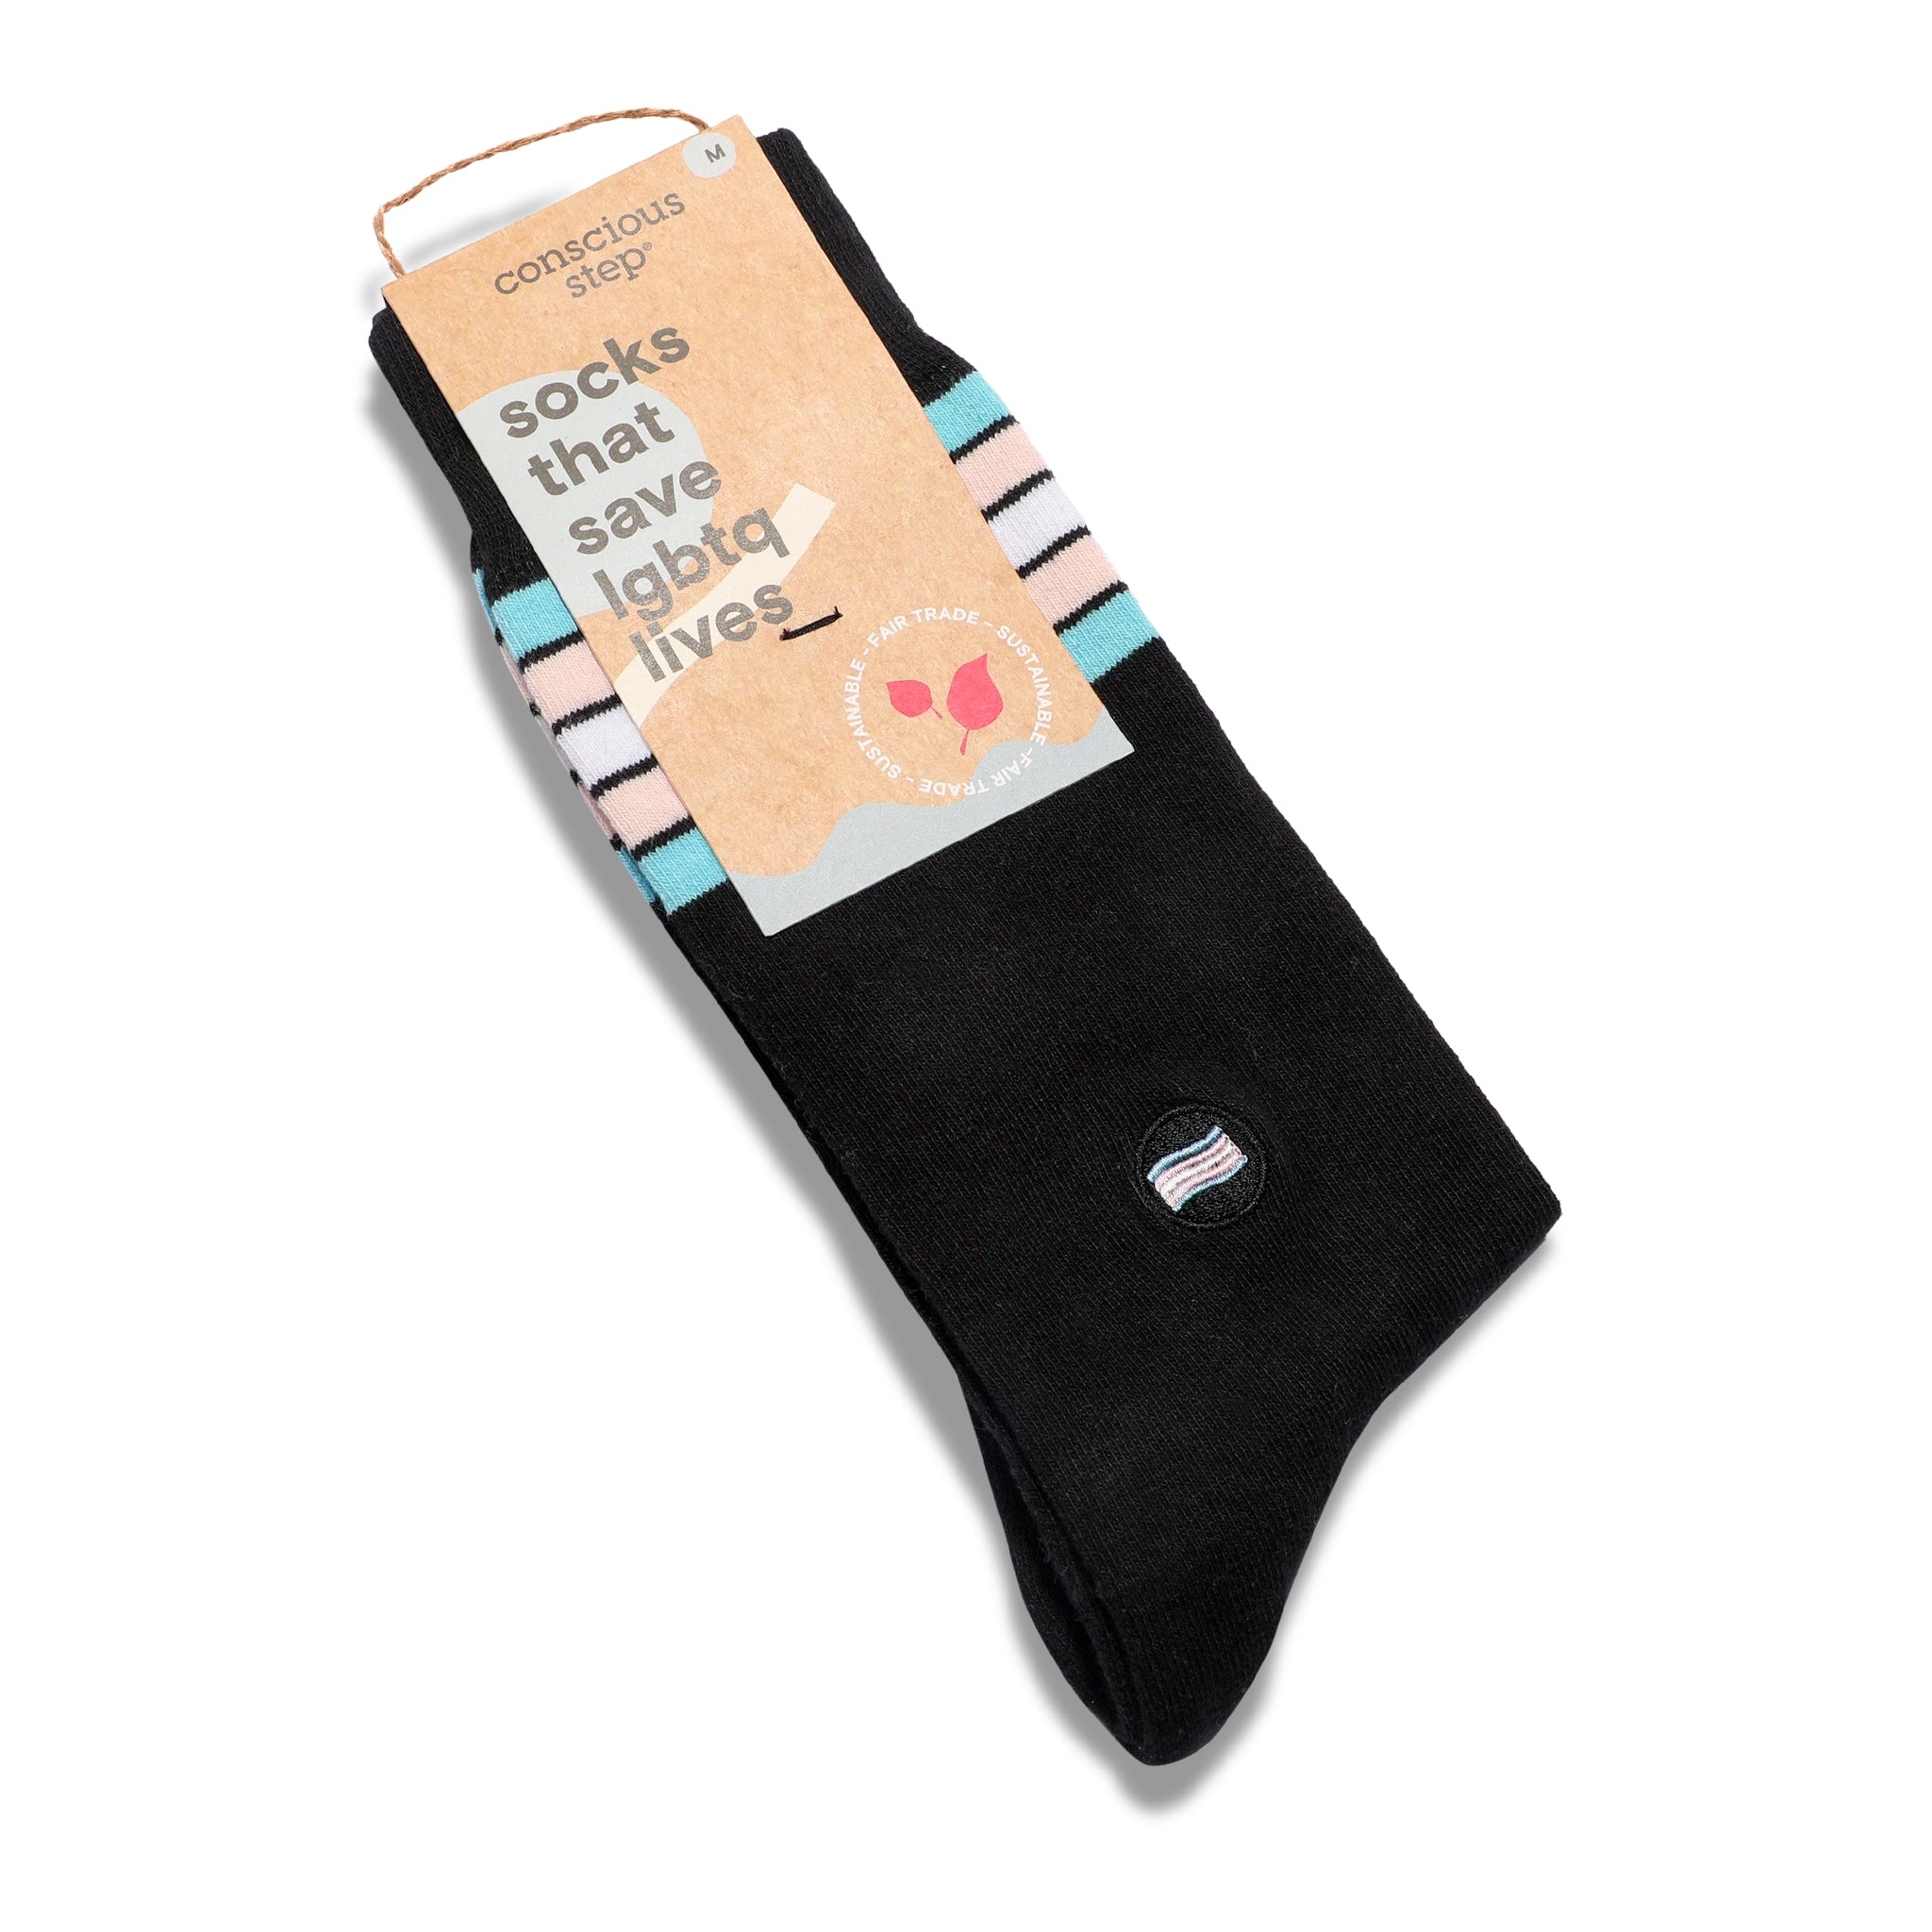 Socks that Save LGBTQ Lives